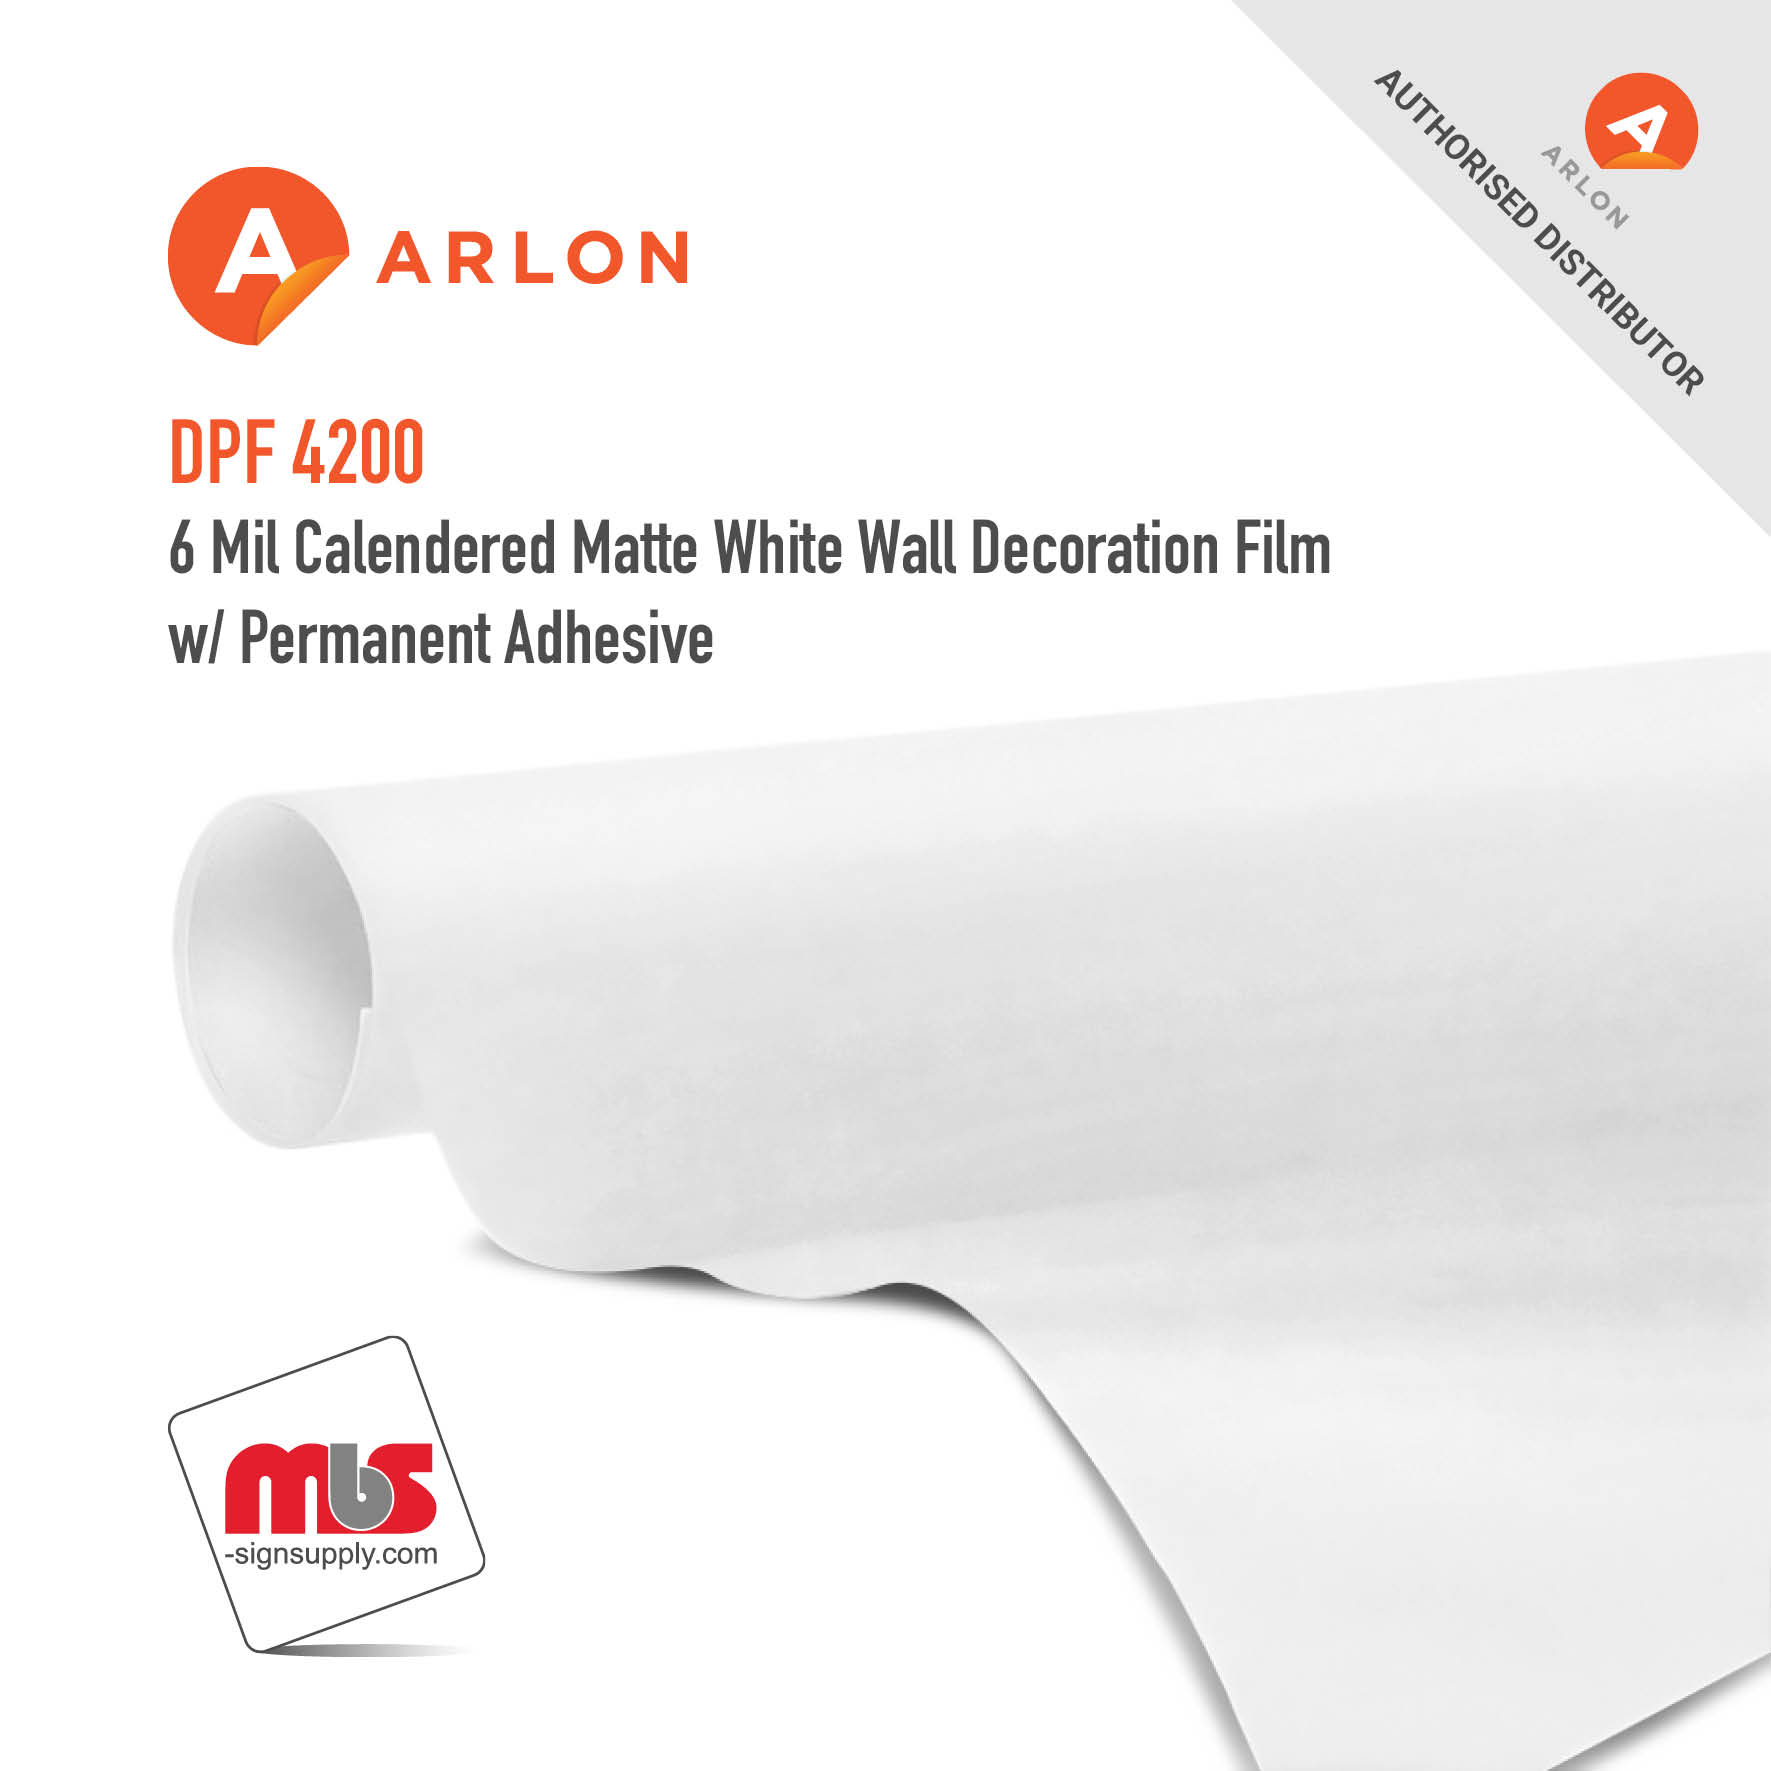 54'' x 25 Yard Roll - Arlon DPF 4200 6 Mil Calendered Matte White Wall Decoration Film w/ Permanent Adhesive